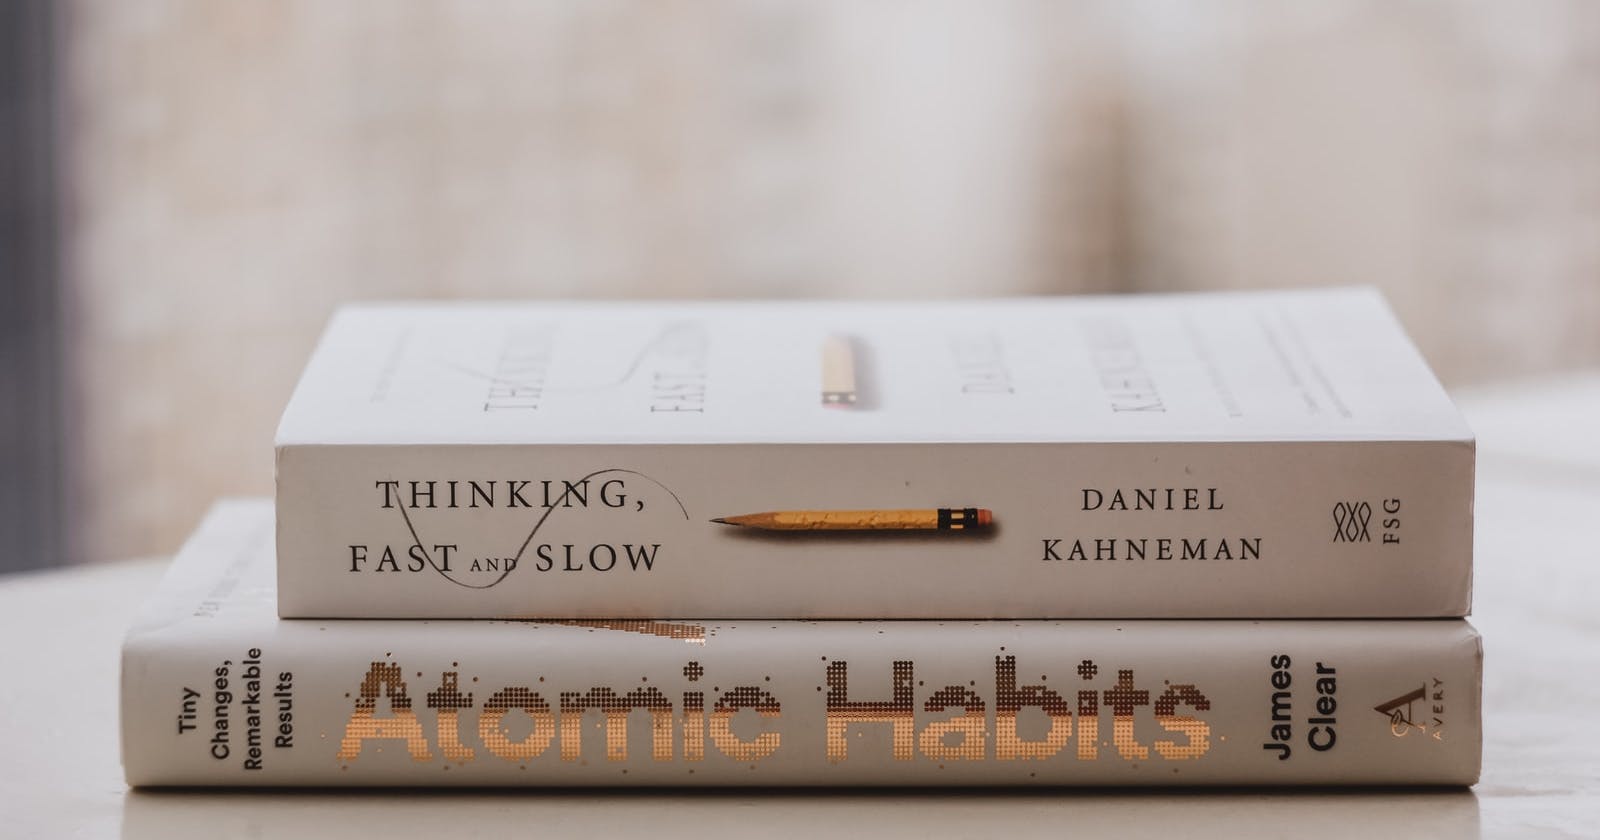 Atomic Habits - My new read!